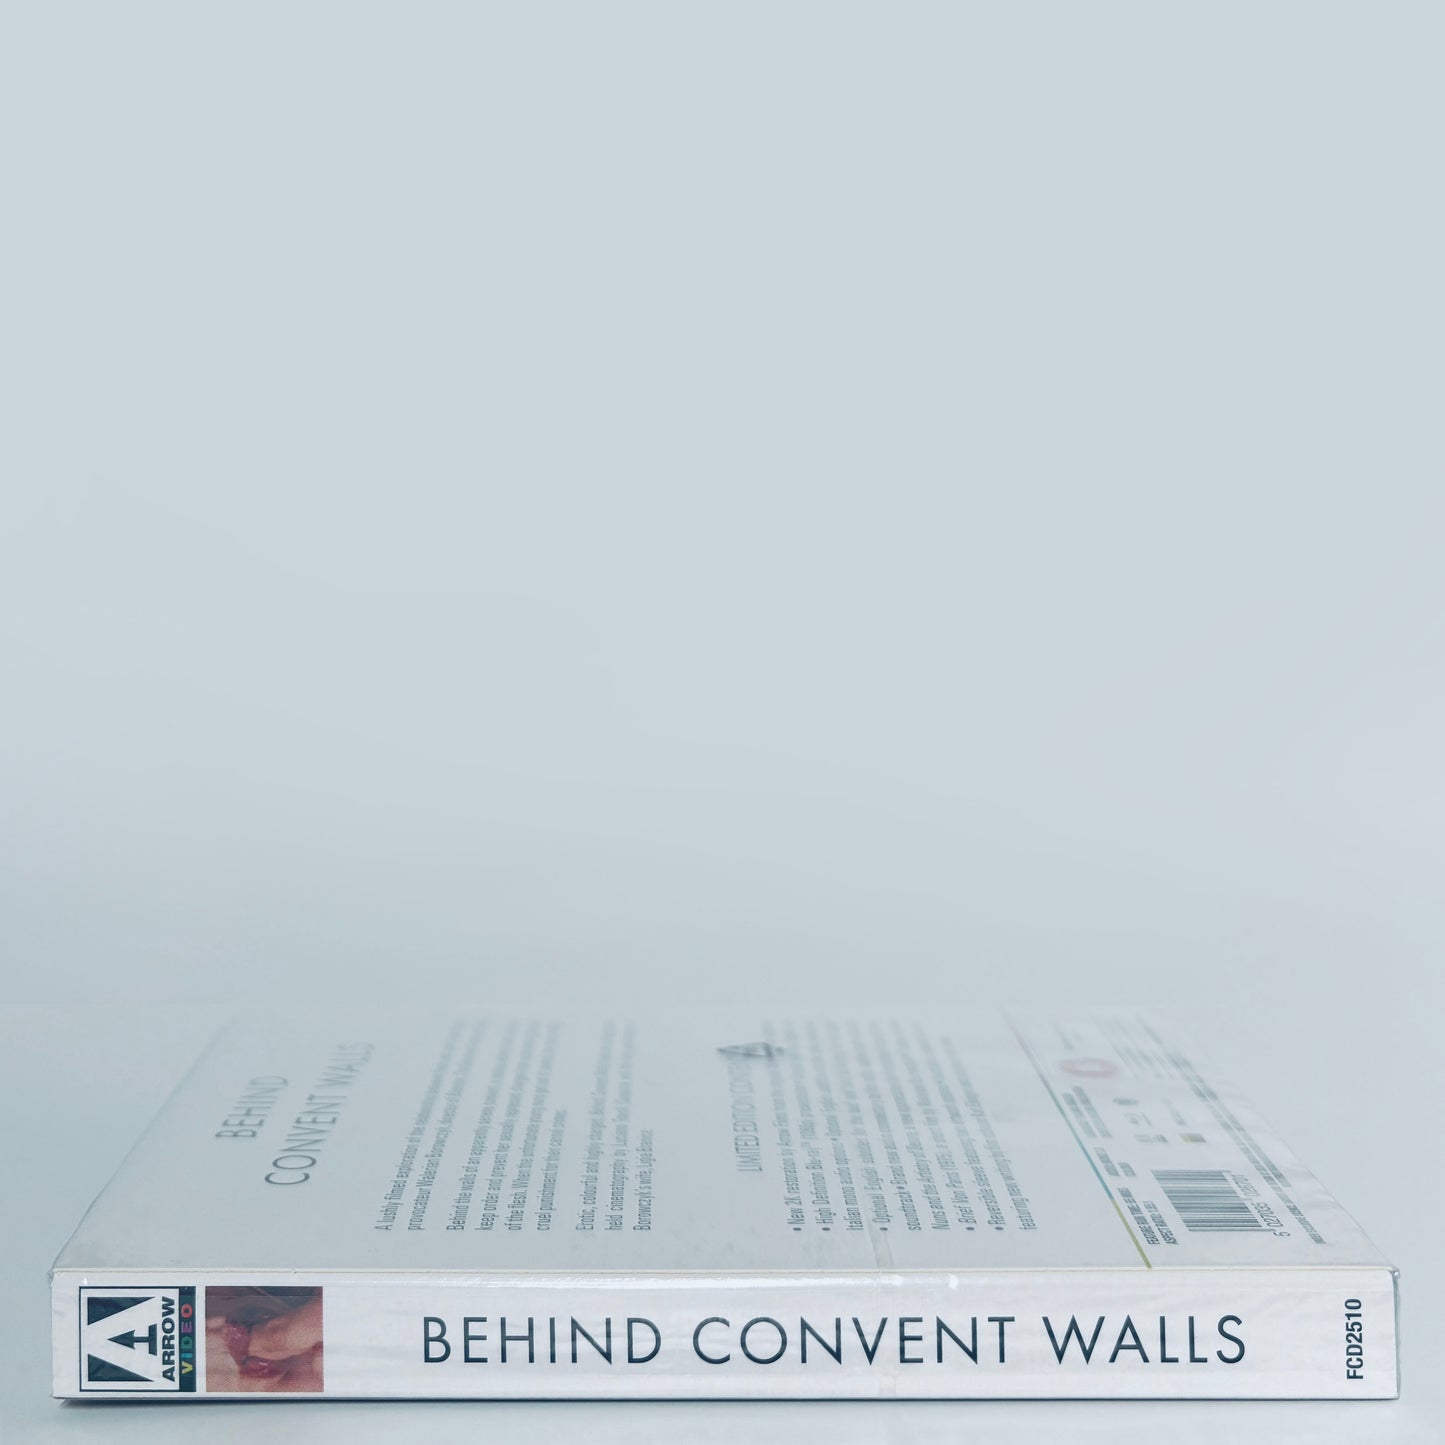 Behind Convent Walls 1978 Limited Region B Blu-ray Arrow Films UK Nunsploitation